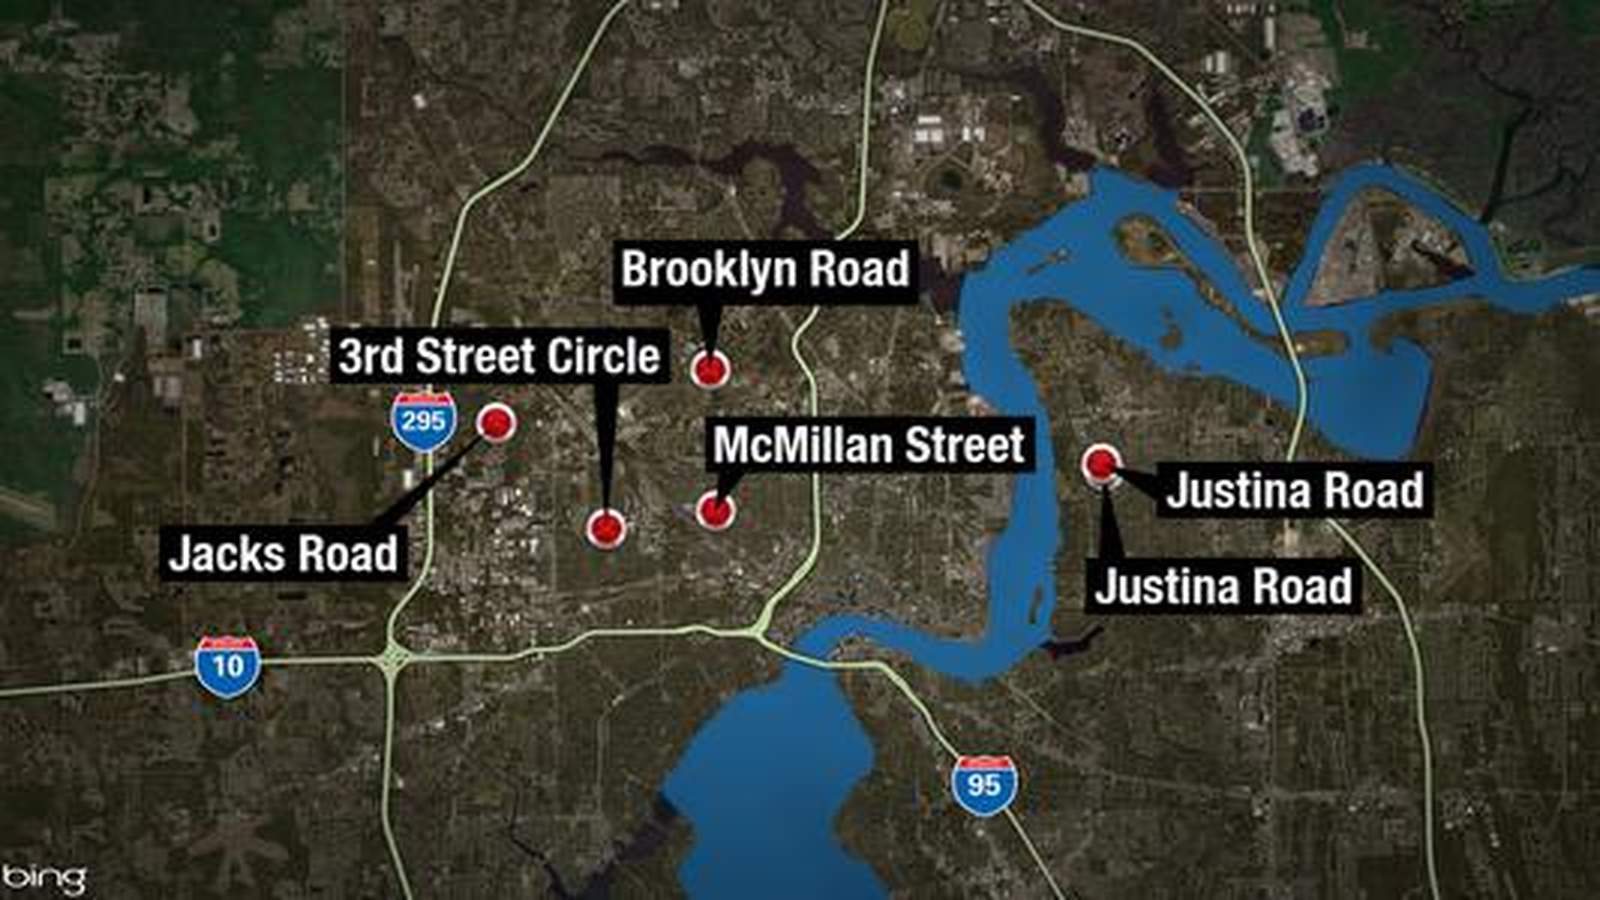 7 shot in 3-day span in violent weekend in Jacksonville